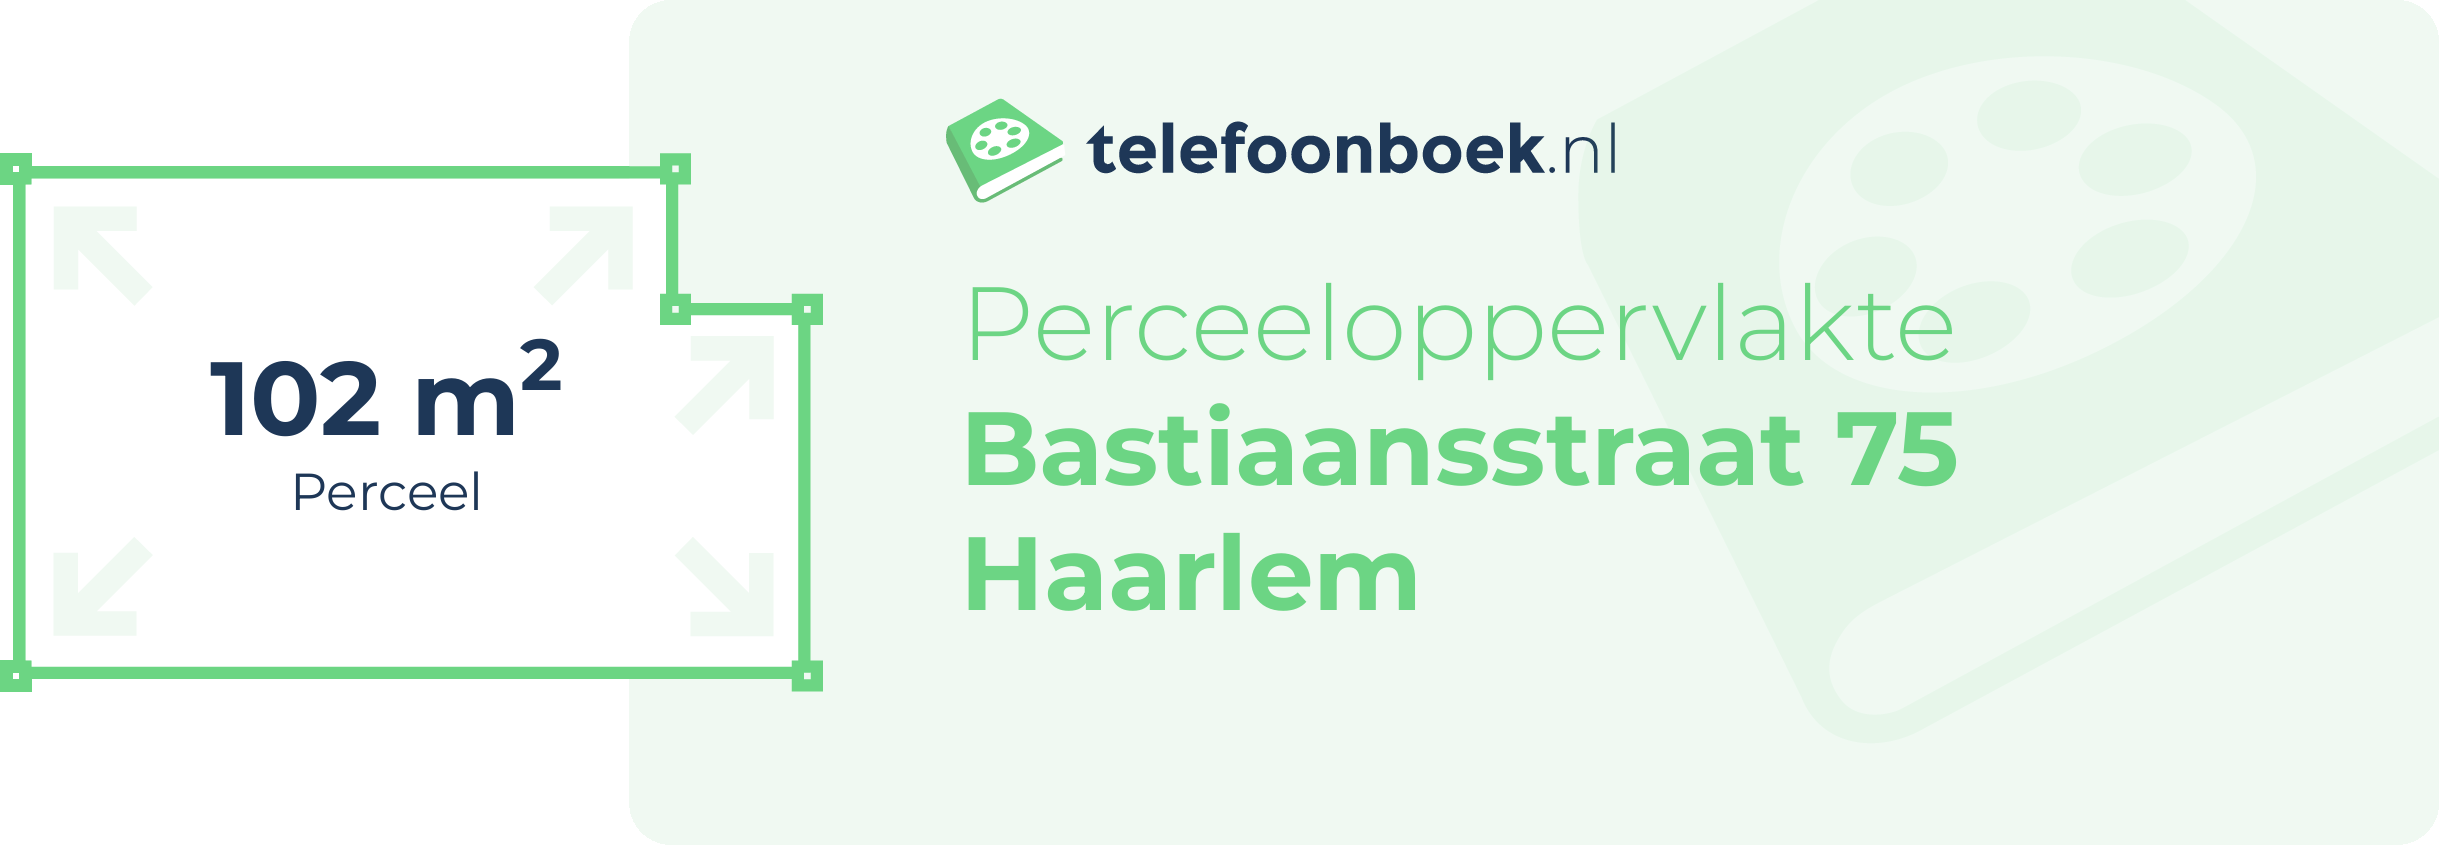 Perceeloppervlakte Bastiaansstraat 75 Haarlem